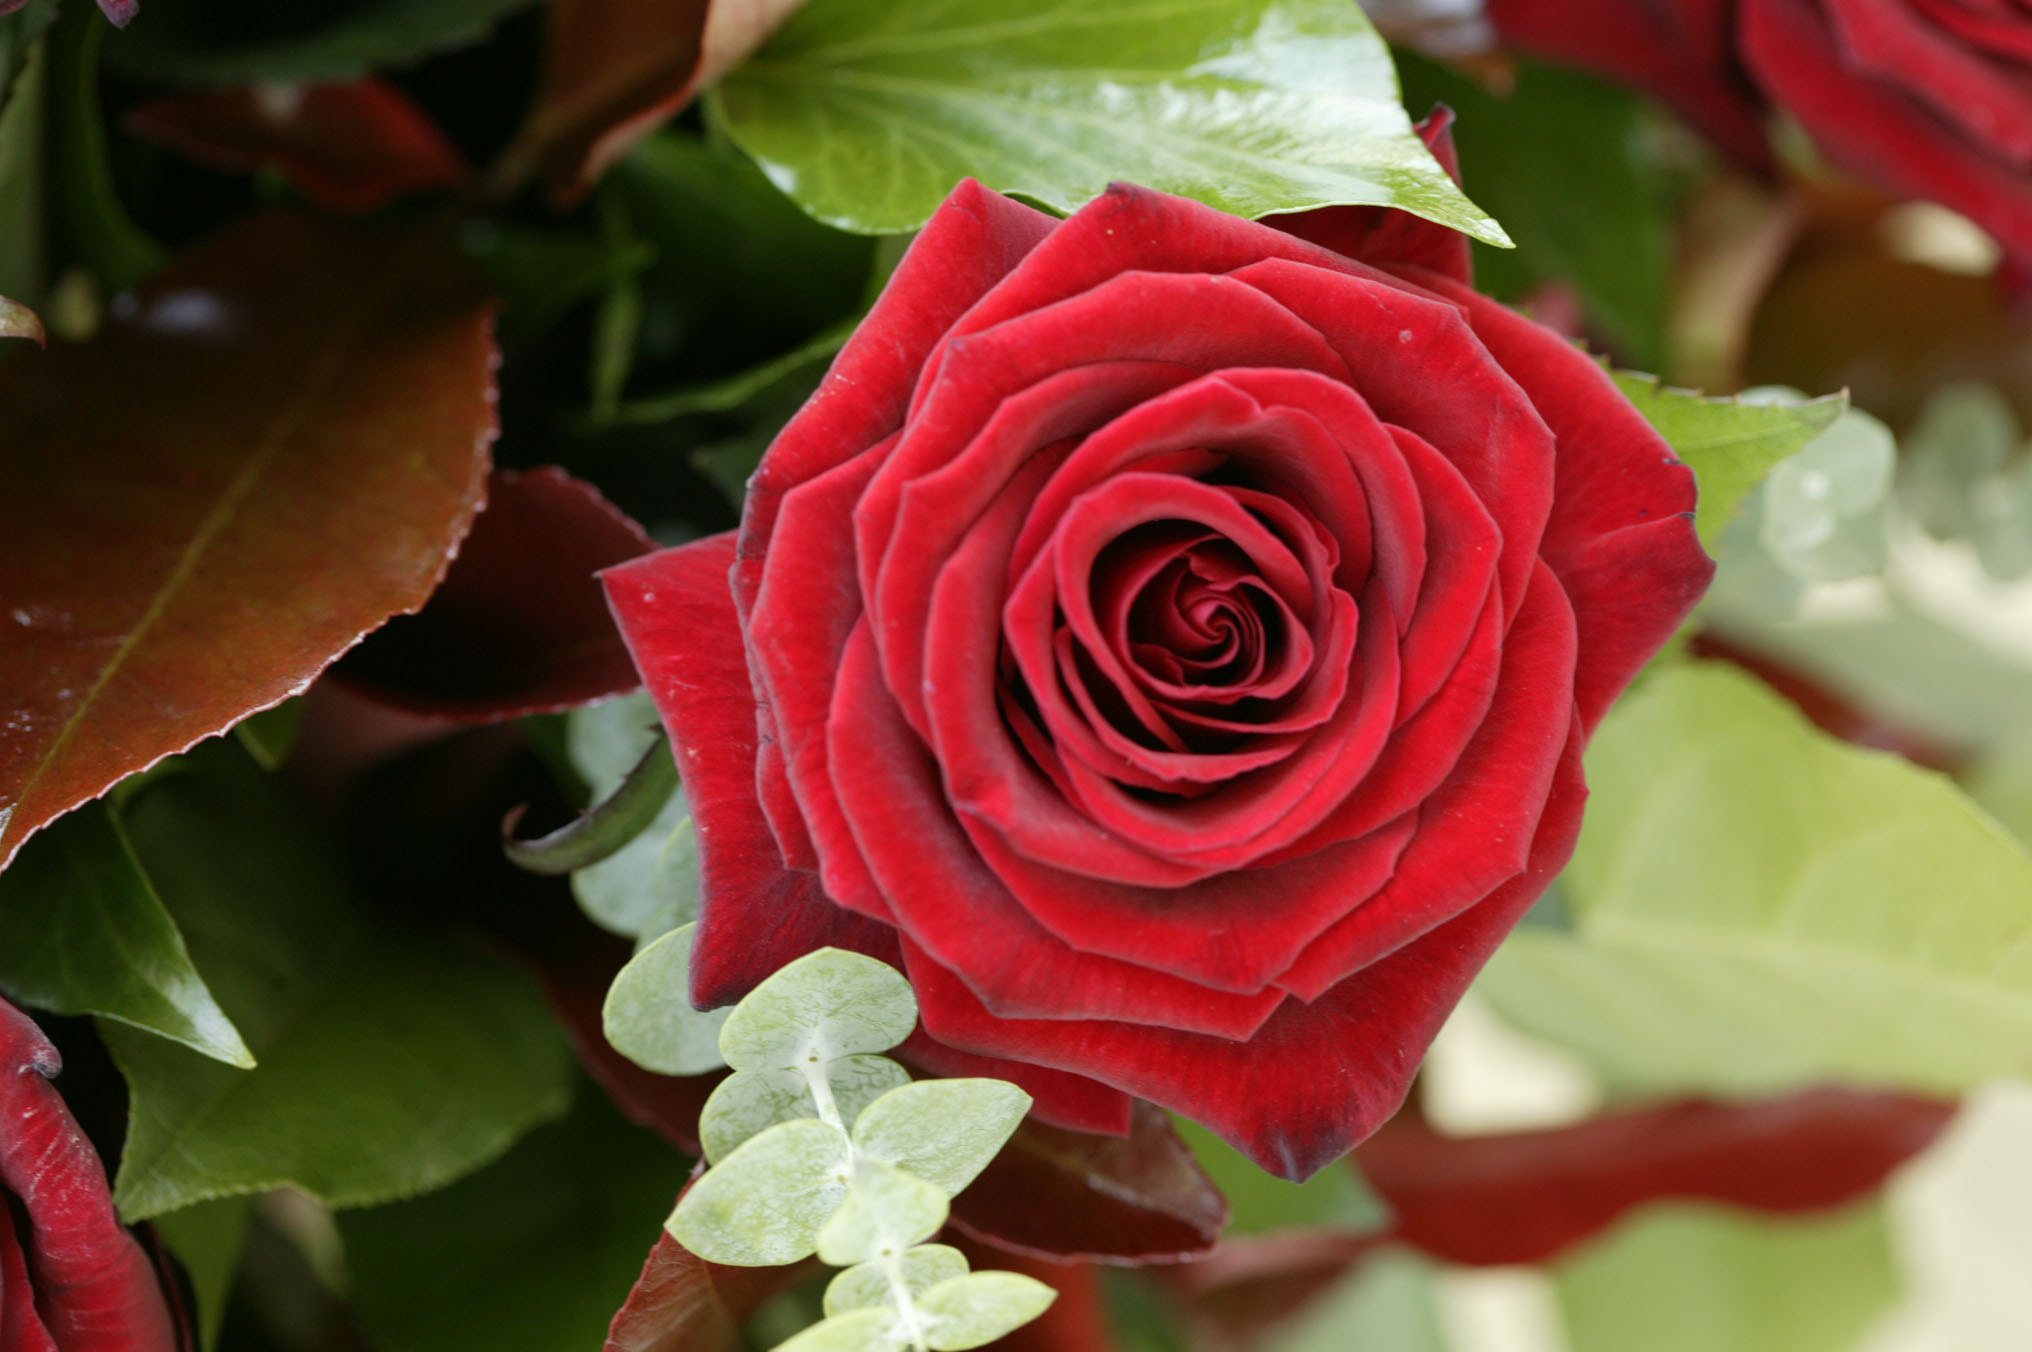 Central Botanical Garden hosts exhibition of roses